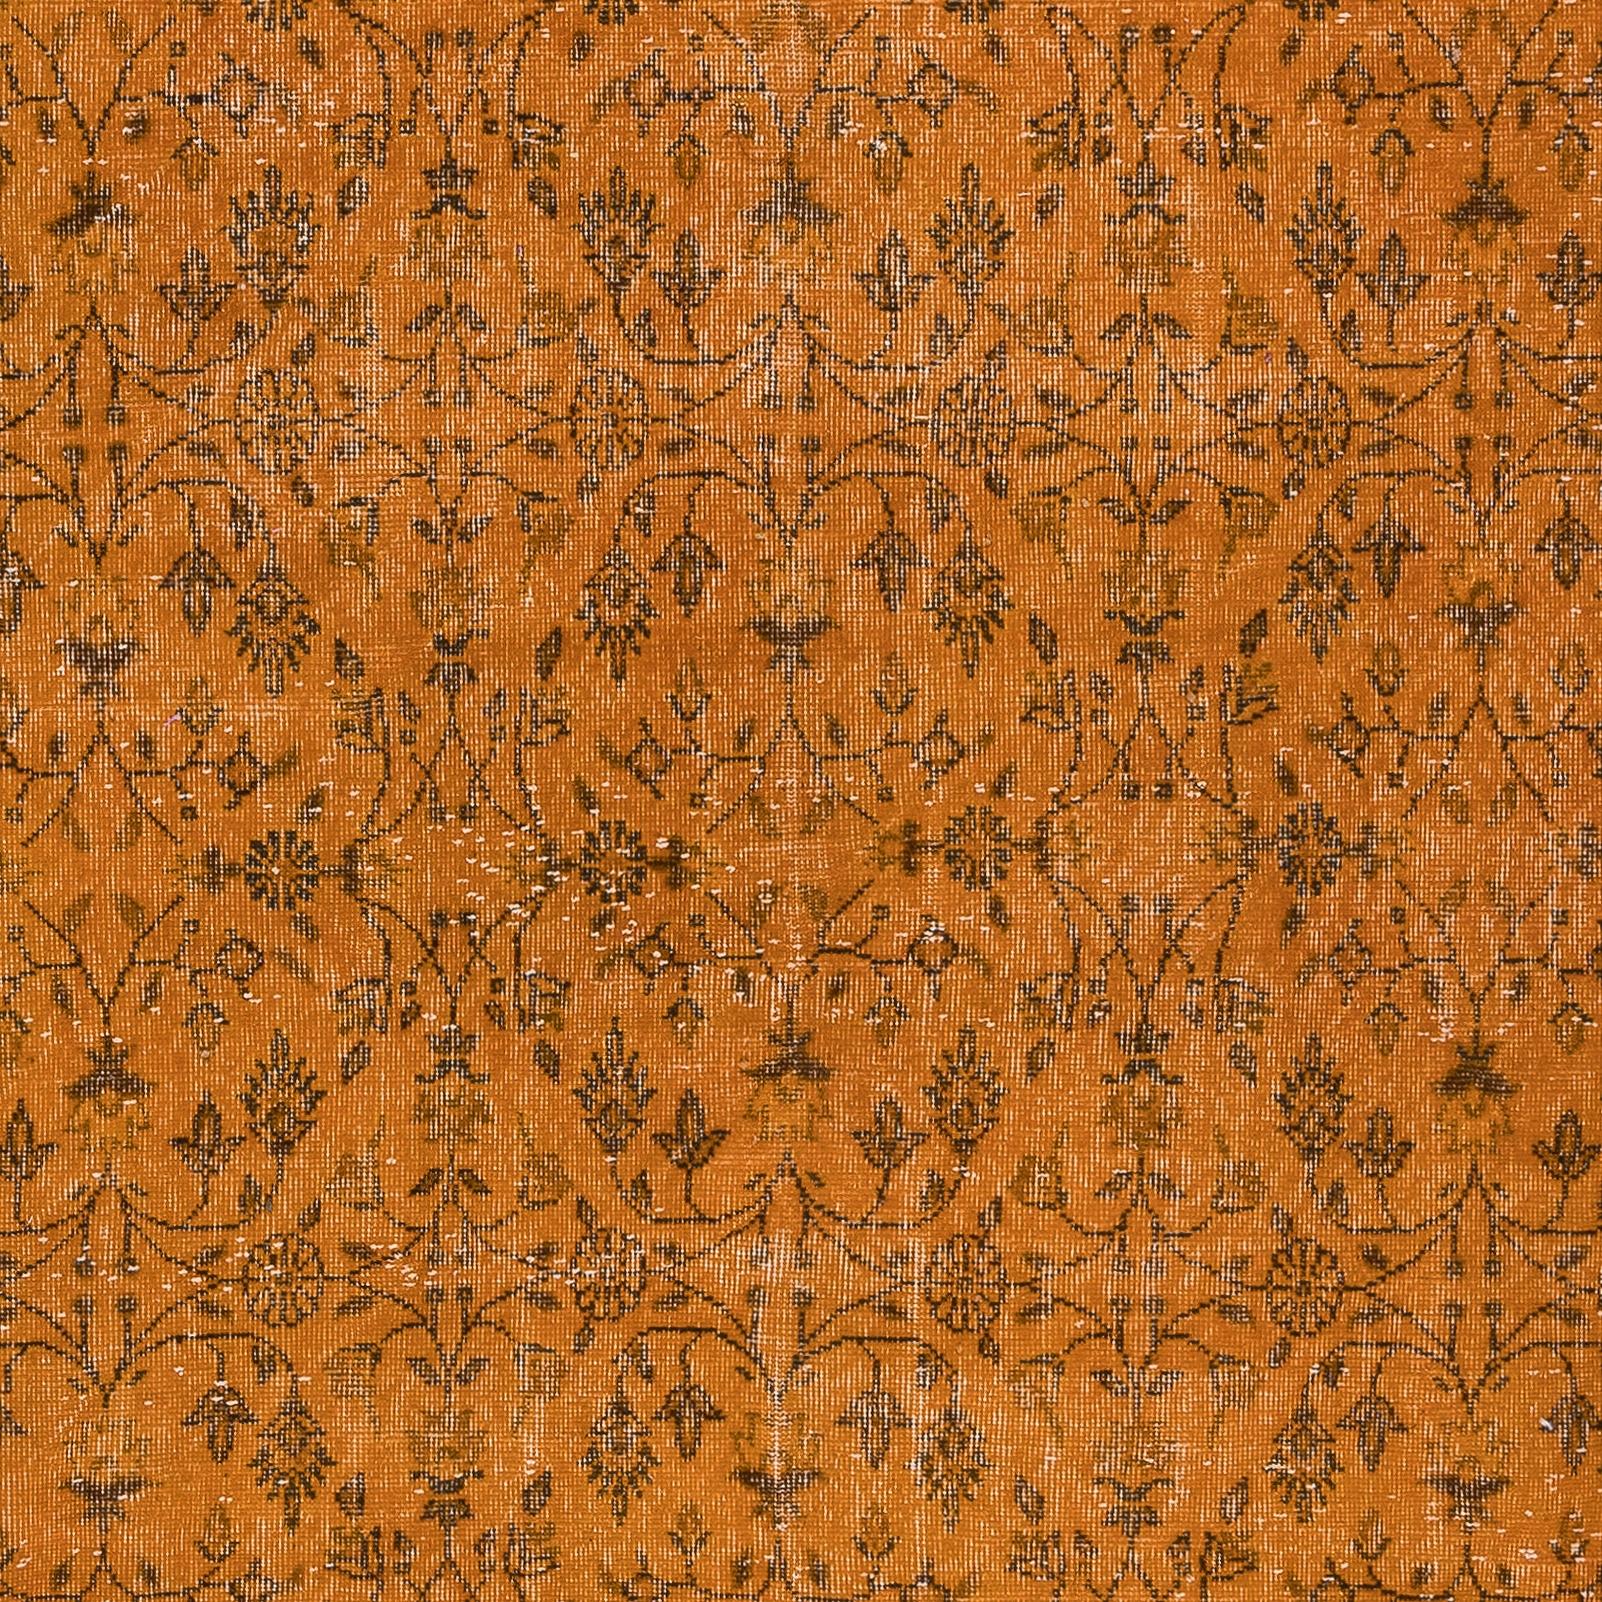 Hand-Woven 6.7x10.5 Ft Handmade Rug with All-Over Botanical Design, Orange Turkish Carpet For Sale